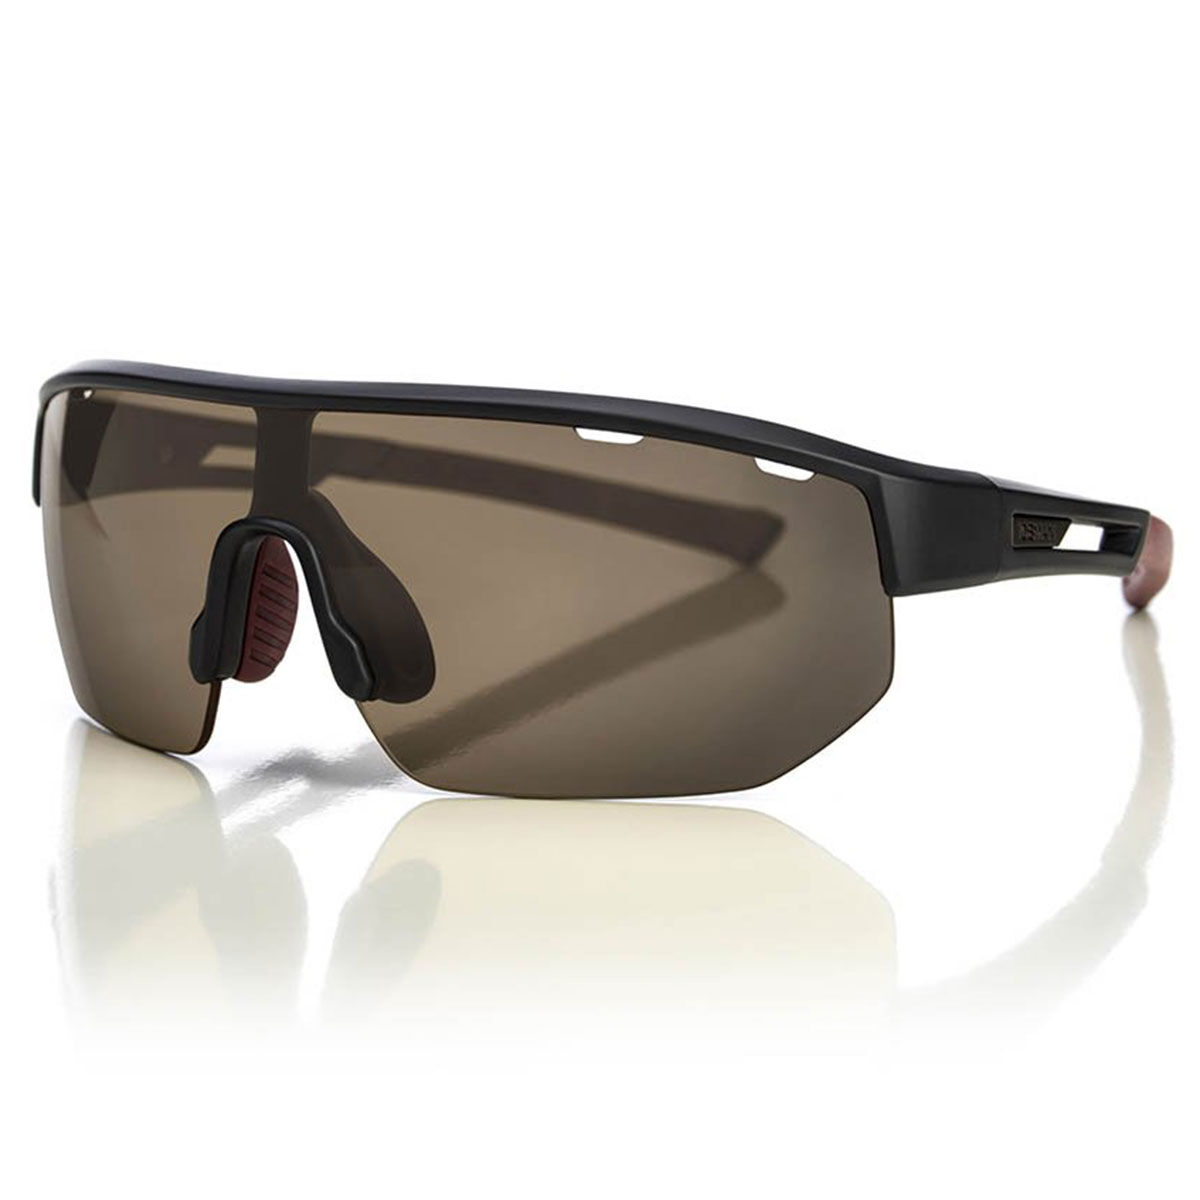 Henrik Stenson Eyewear Iceman 3.0 Golf Sunglasses, Mens, Grey/pastel/brown/bronze, One Size | American Golf